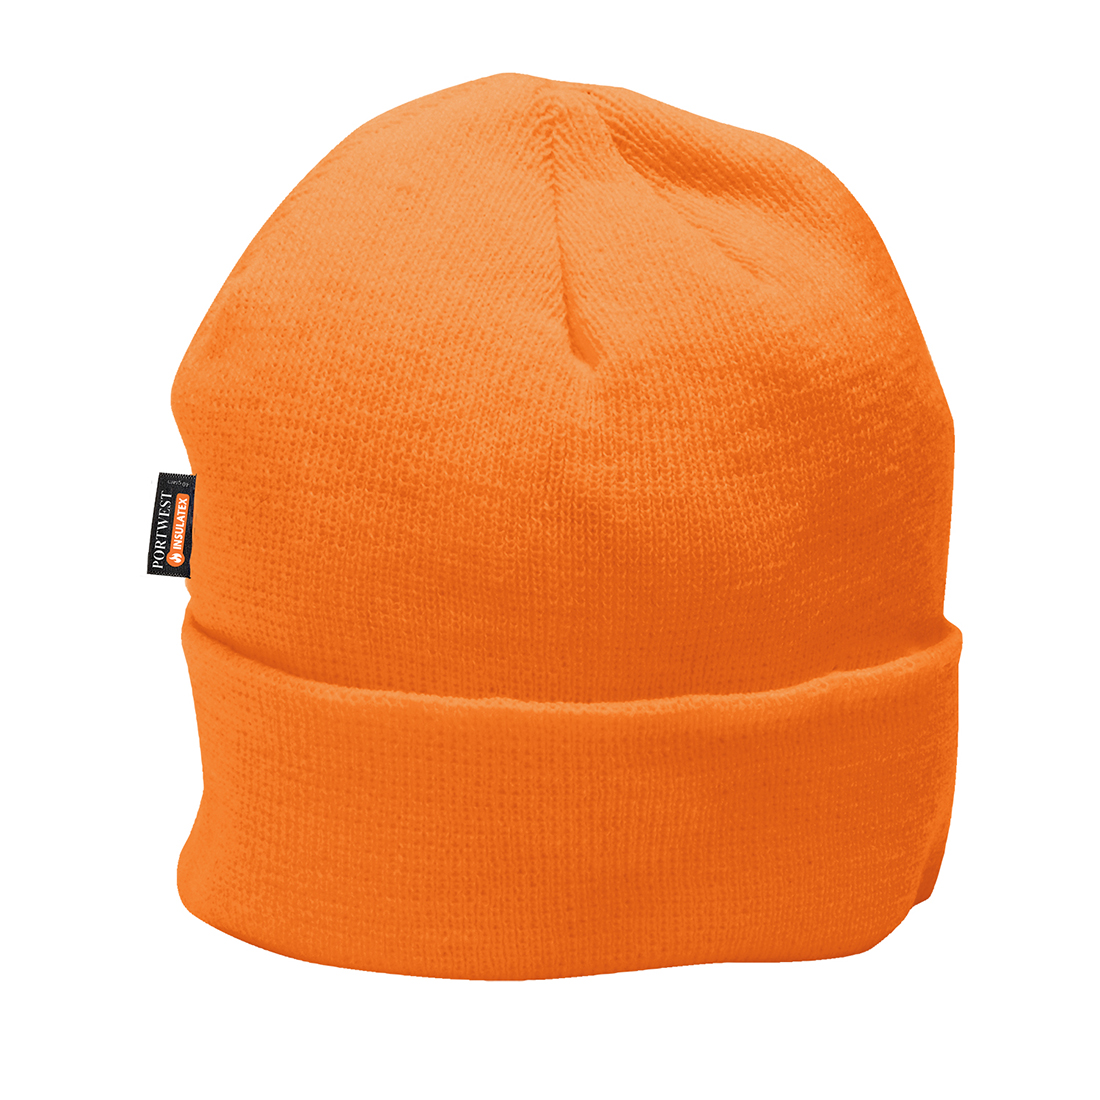 Knit Cap Insulatex Lined Size  Orange